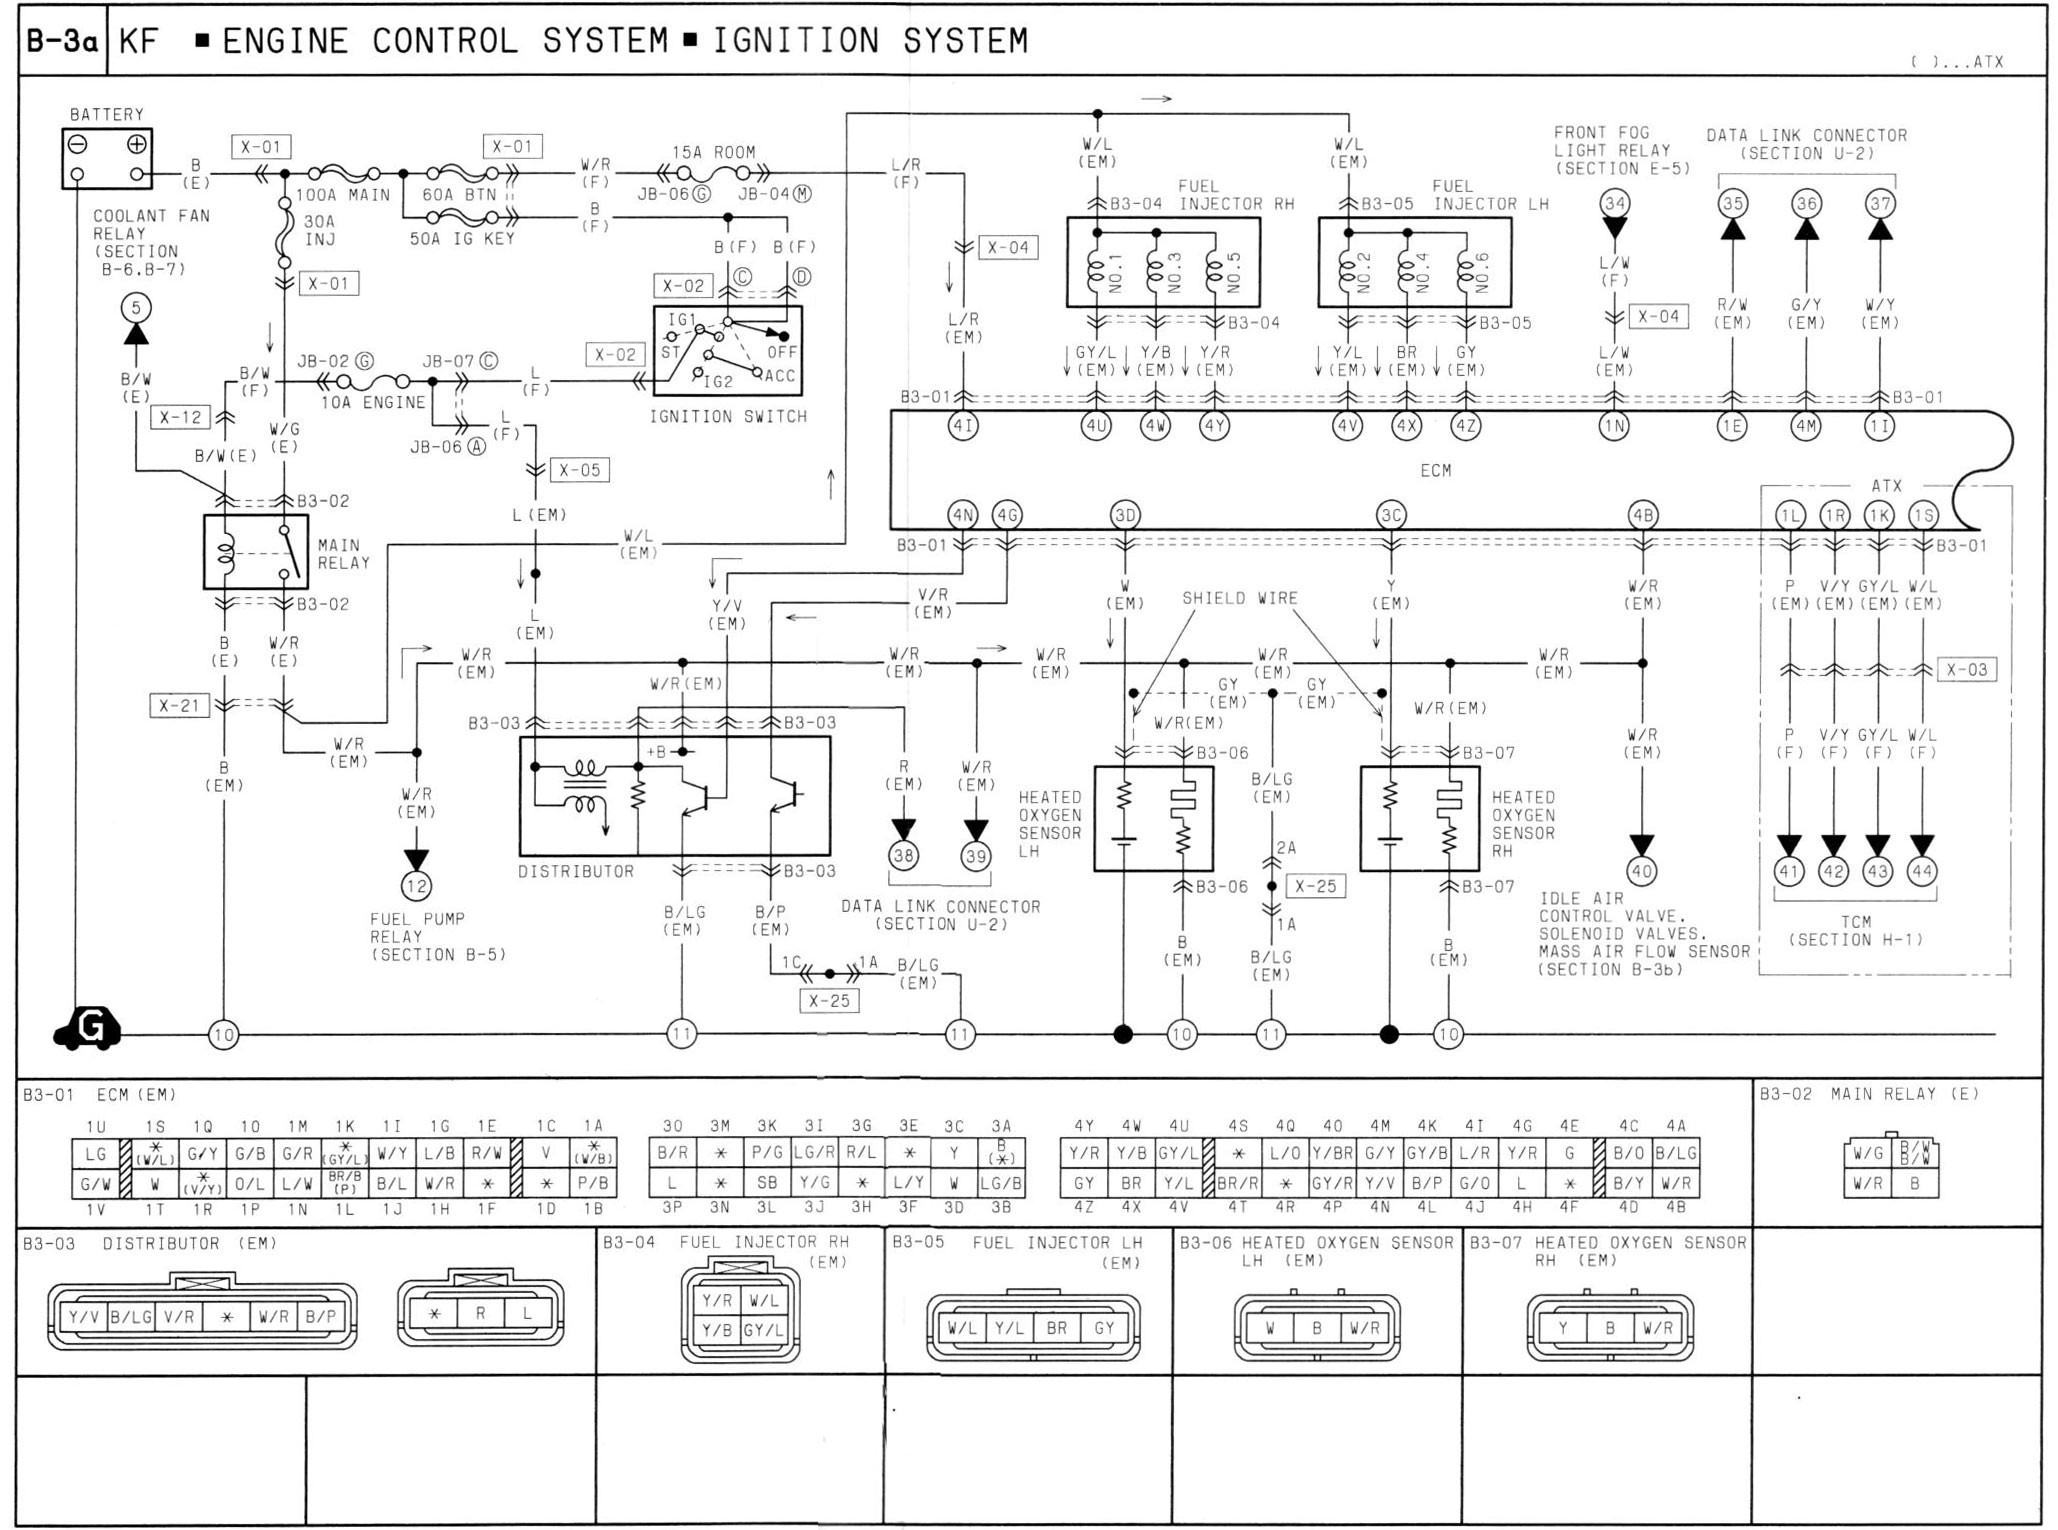 toyota engine diagram mazda 323 1993 wiring diagram wiring diagrams rh detoxicrecenze Mazda 323 BJ Relay Diagram Mazda Miata Wiring Diagram